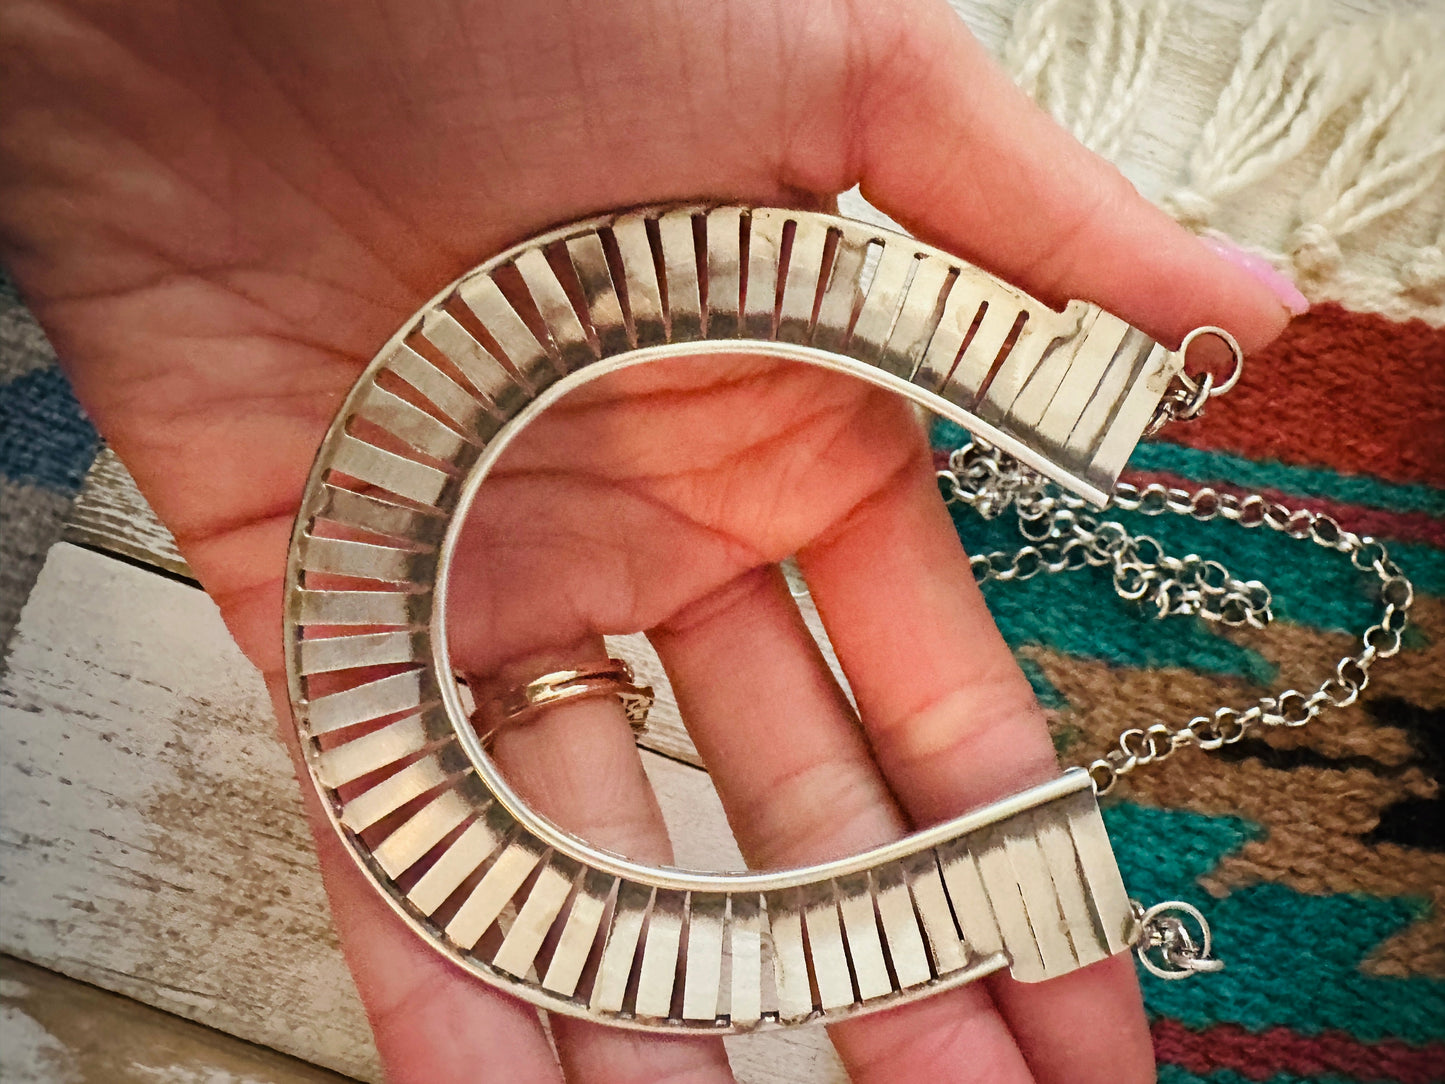 Navajo Horseshoe Necklace